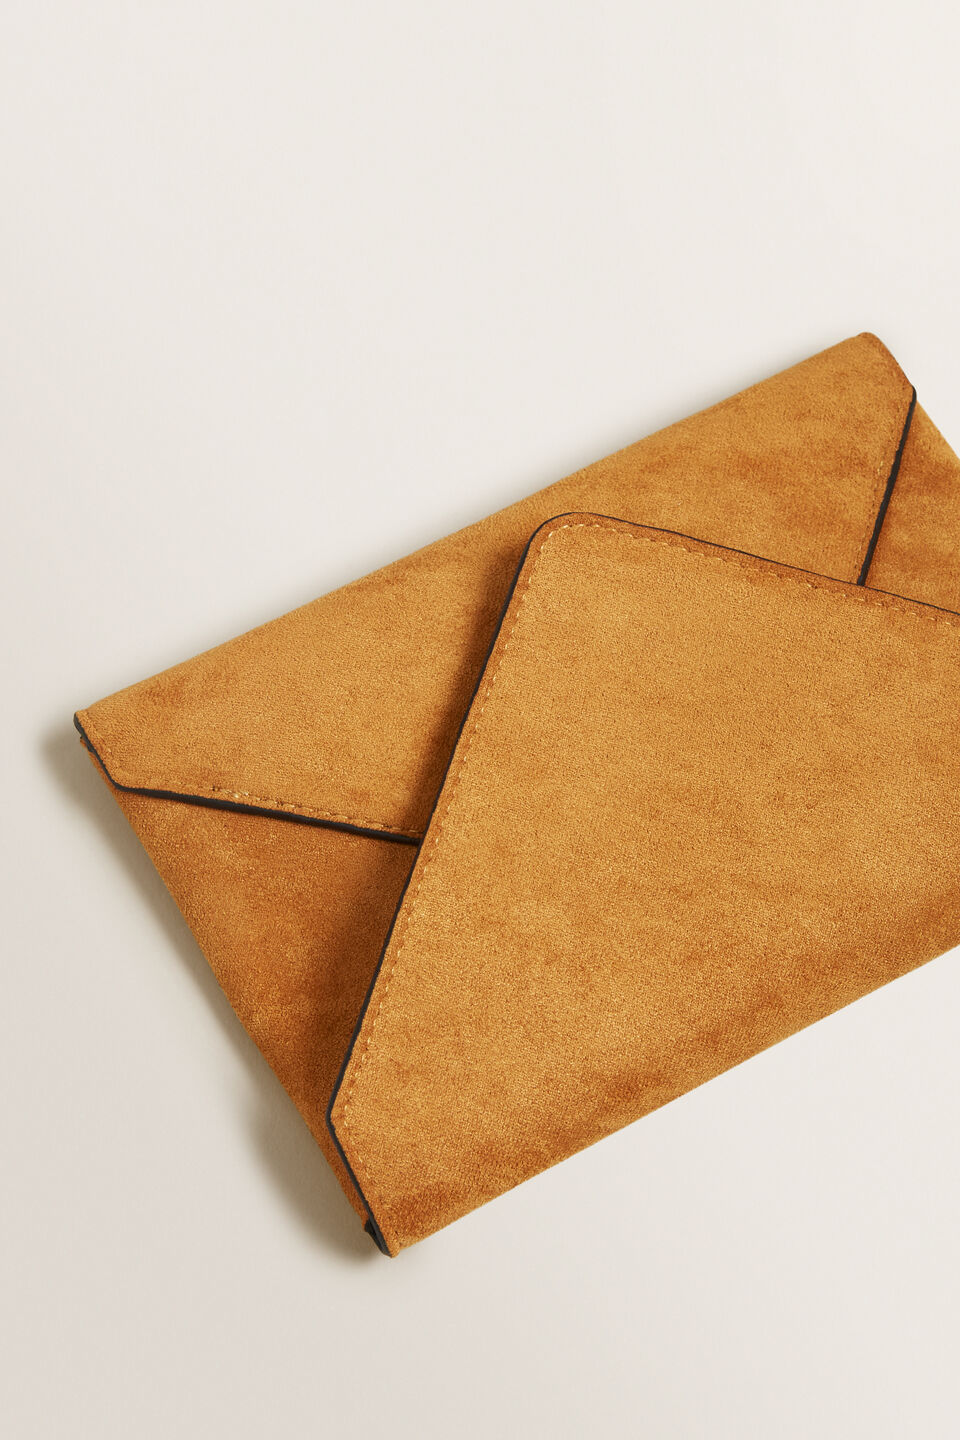 Envelope Pouch  